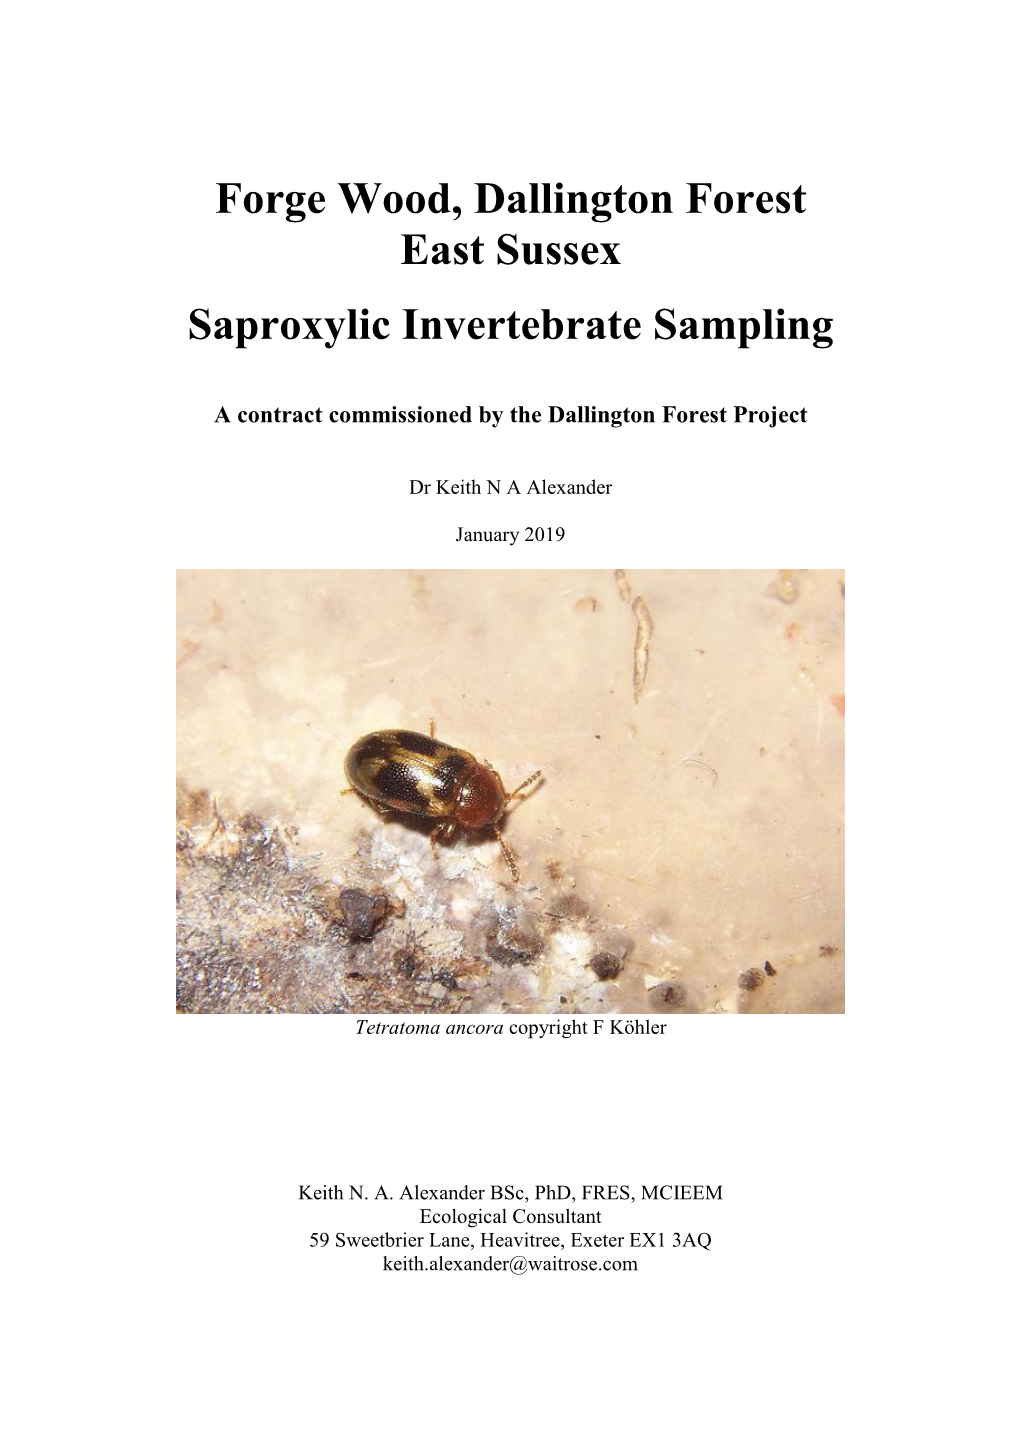 Dallington Forest Saproxylic Invertebrate Sampling 2018 Keith